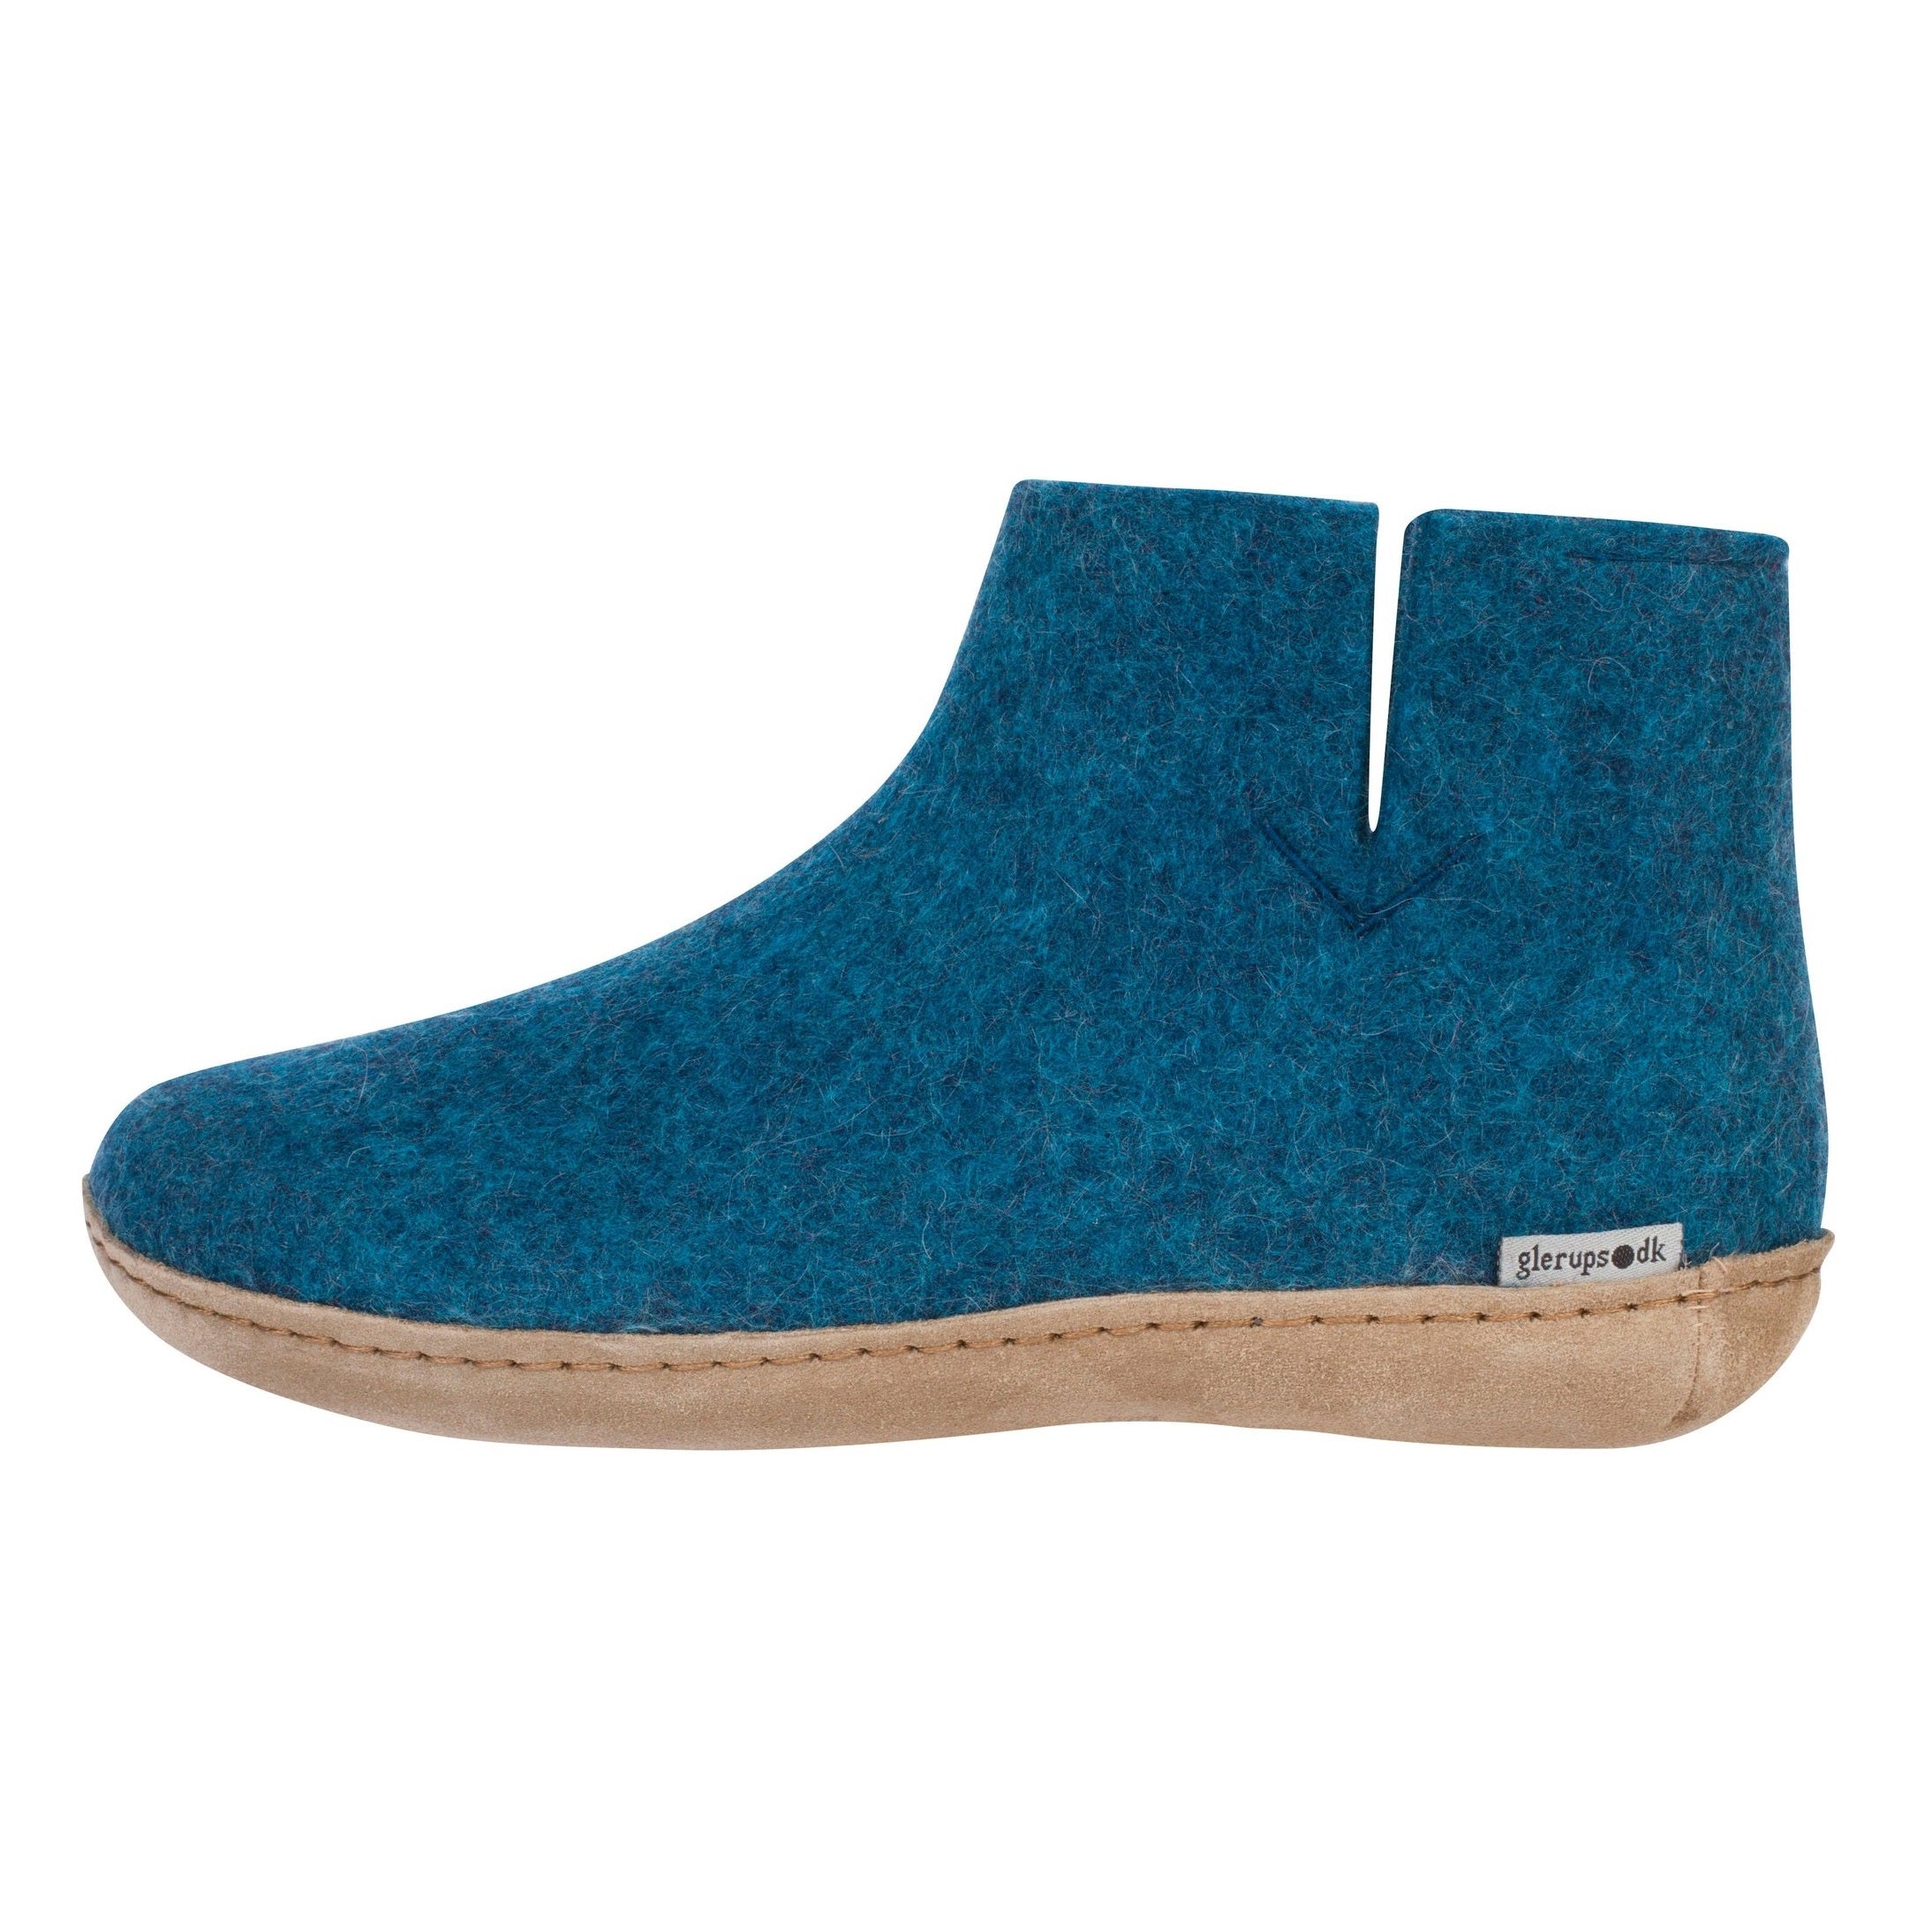 Glerups slipper ankle boot cut leather sole petrol teal blue